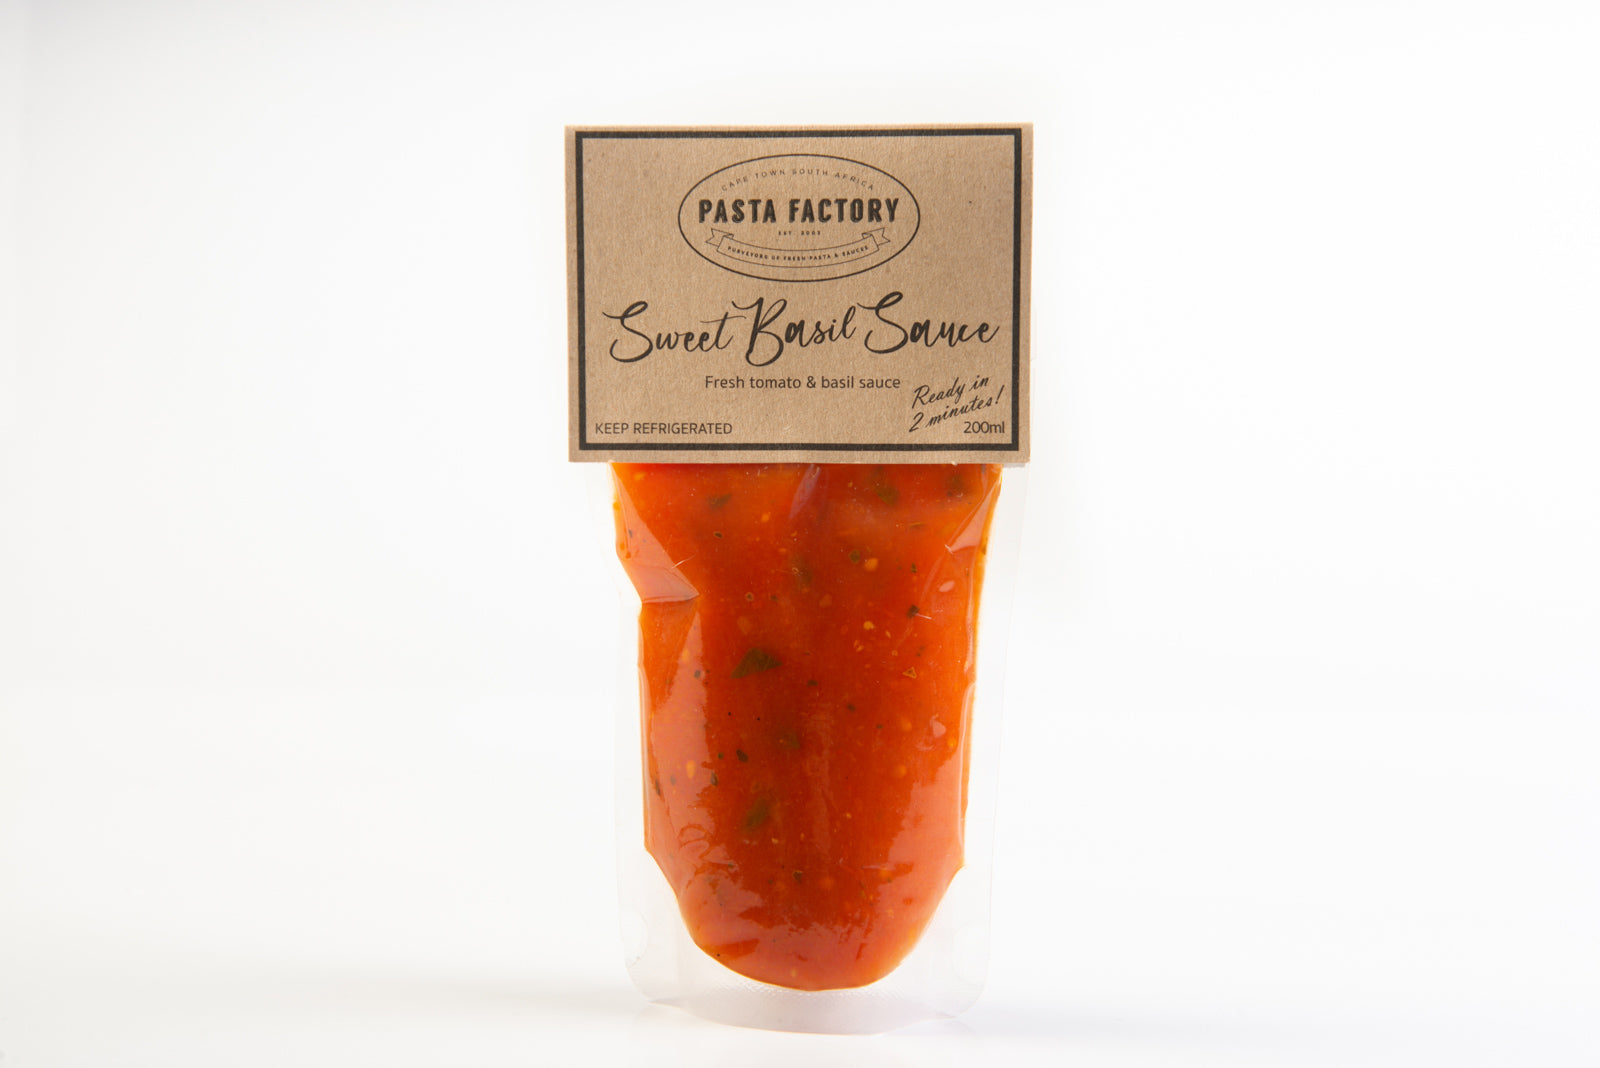 Sweet Basil Sauce tomato based